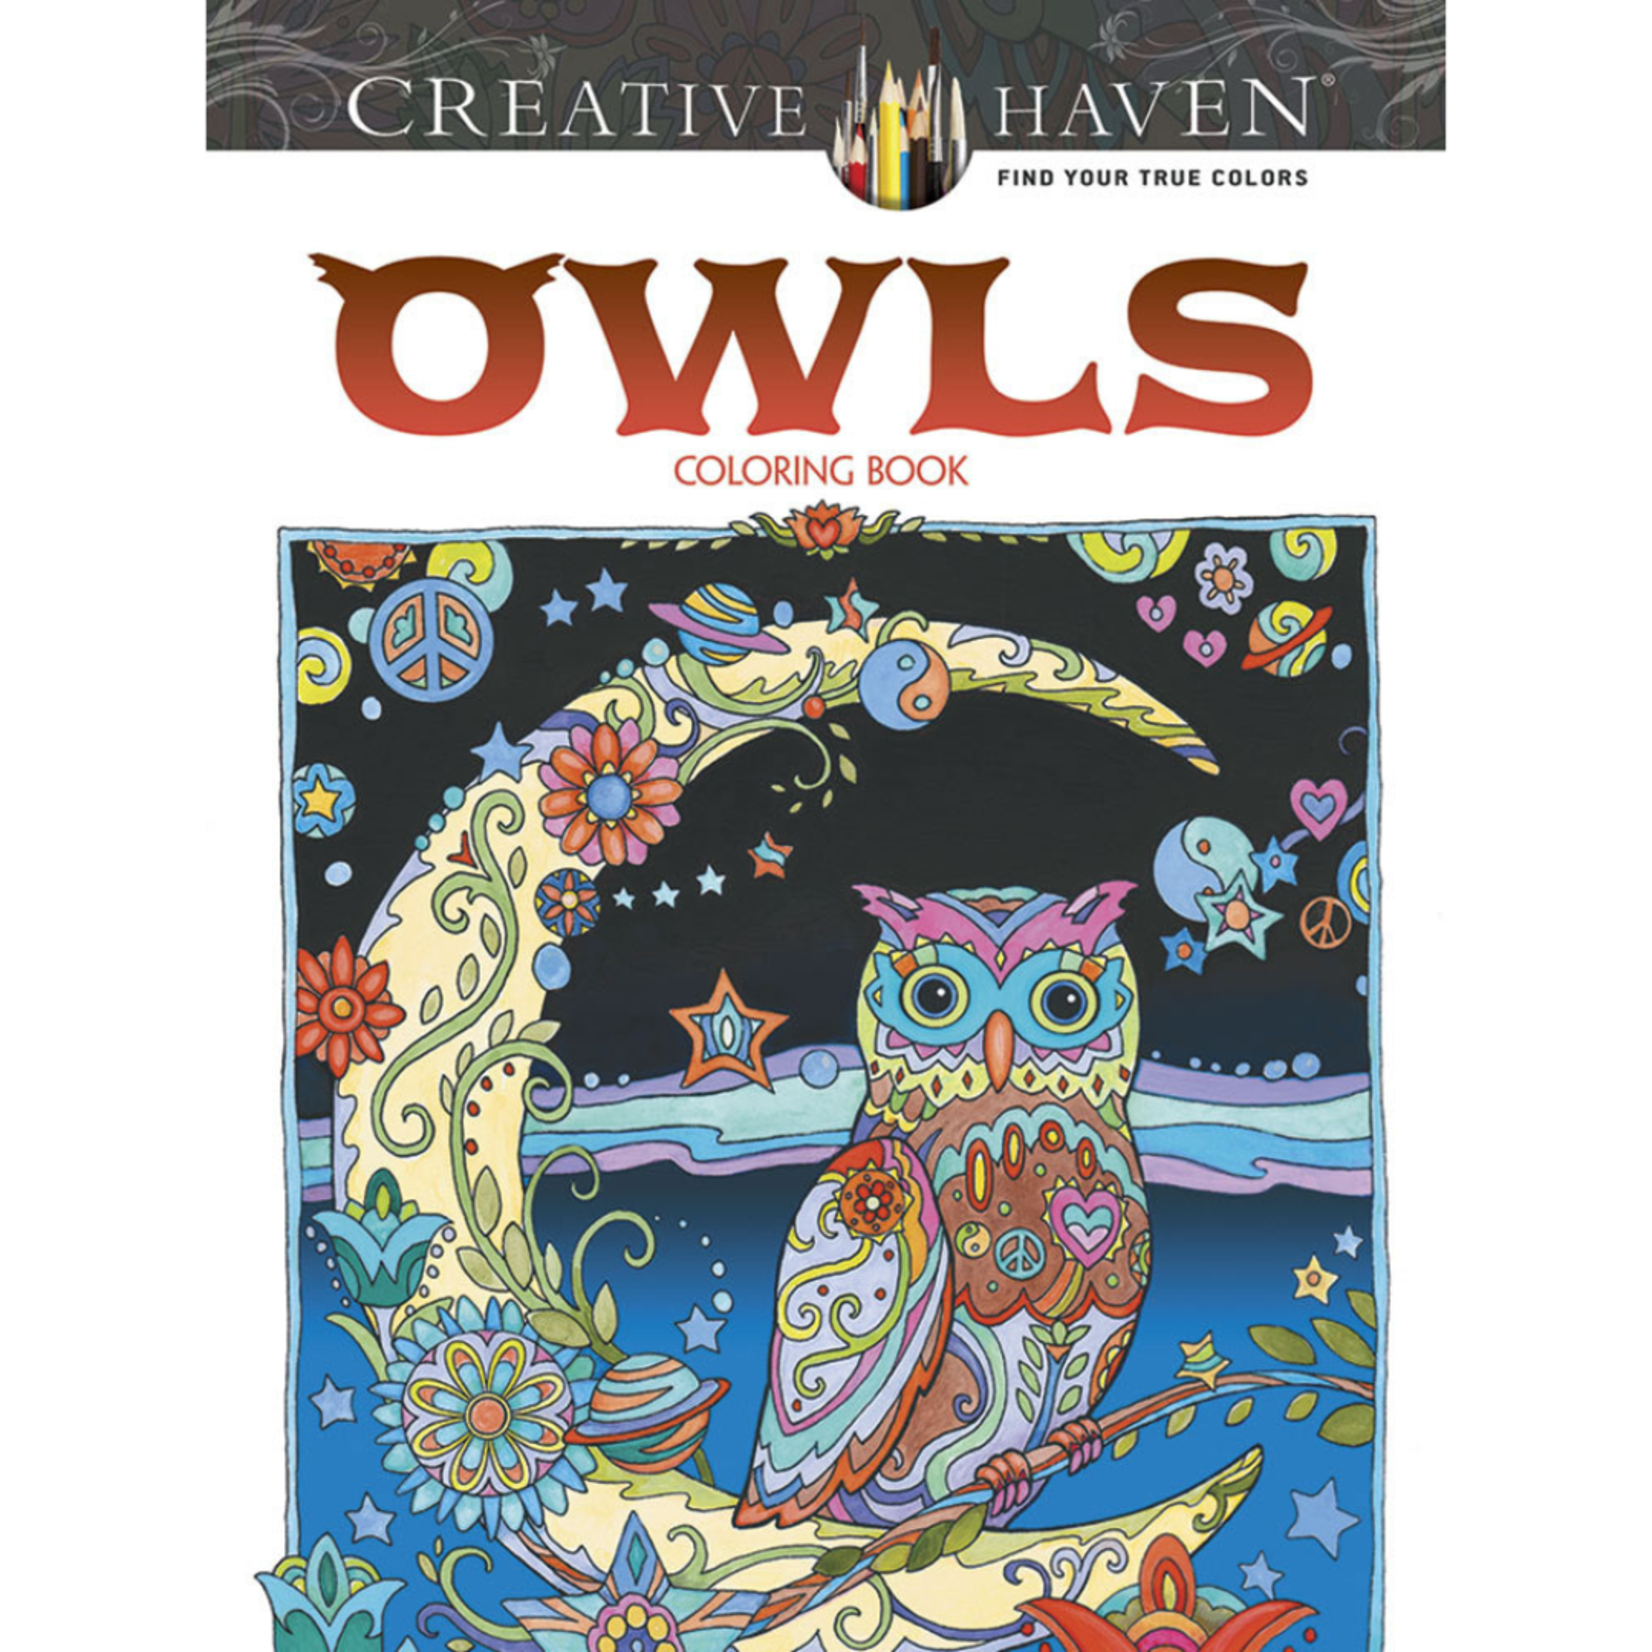 DOVER PUBLICATIONS CREATIVE HAVEN COLOURING BOOK OWLS